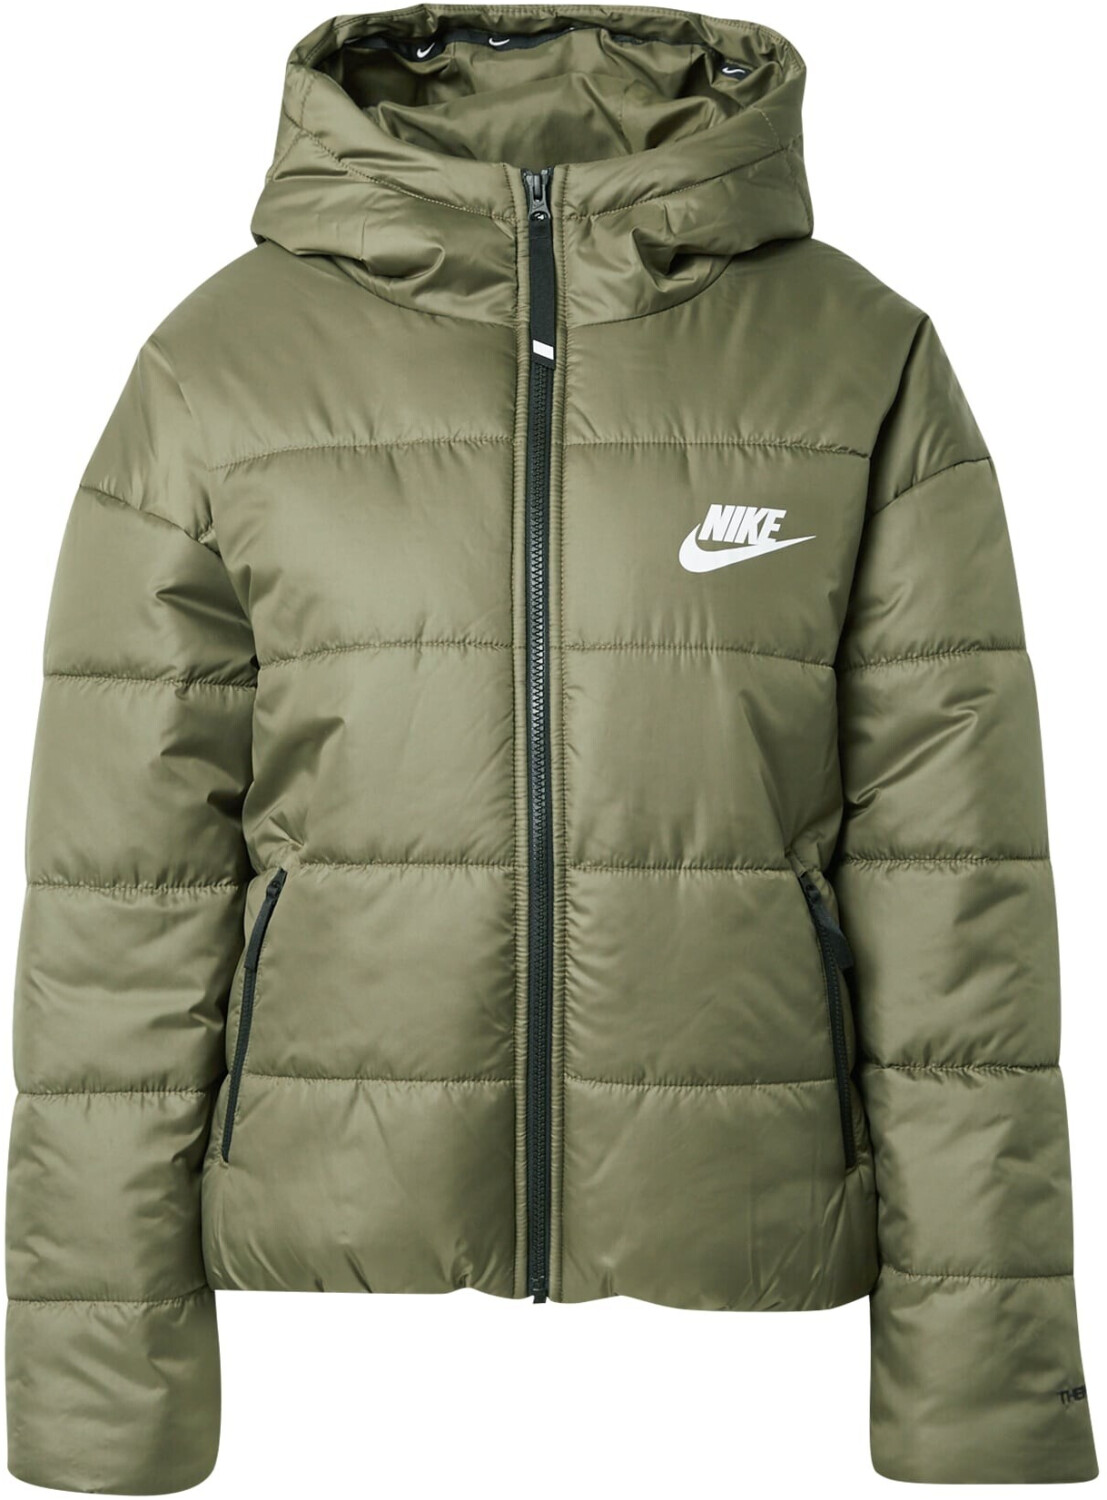 Nike Sportswear Therma-FIT Repel Jacket (DJ6995)  medium olive/black/white